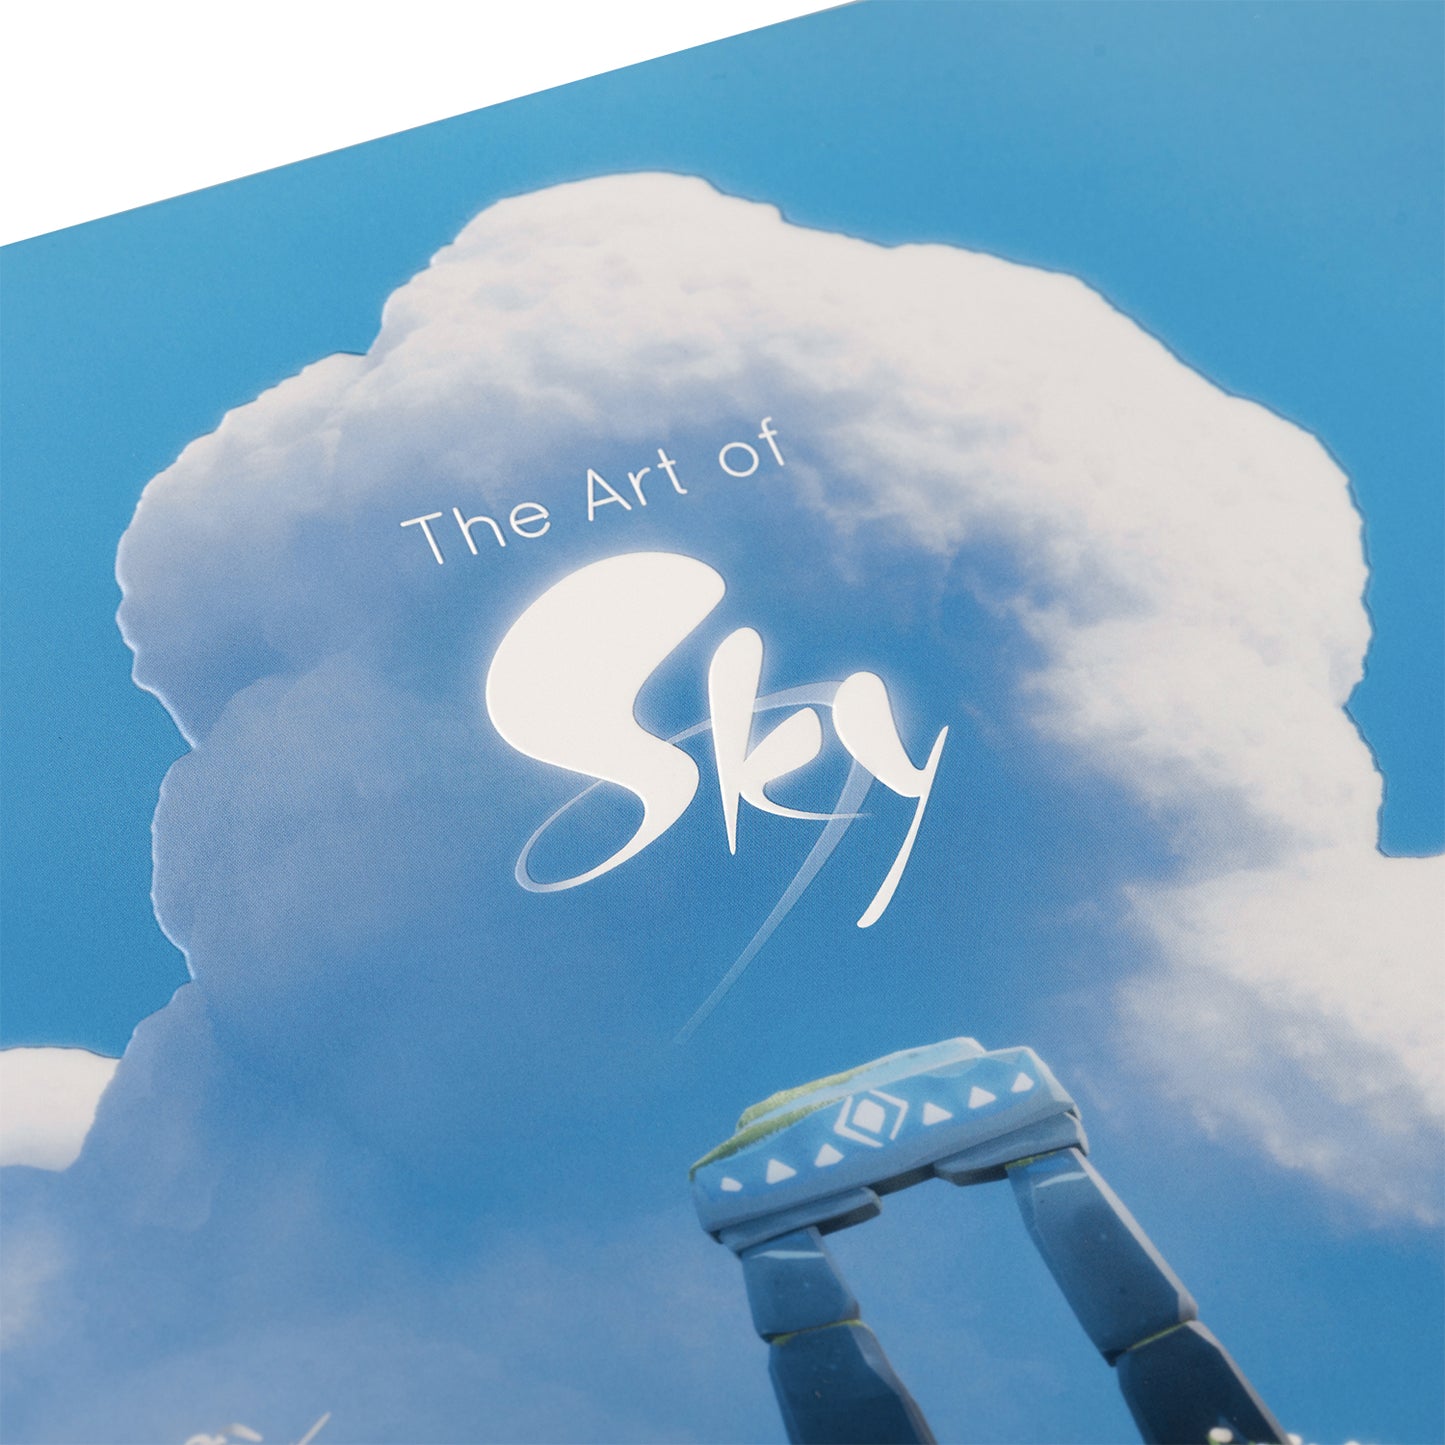 The Art of Sky